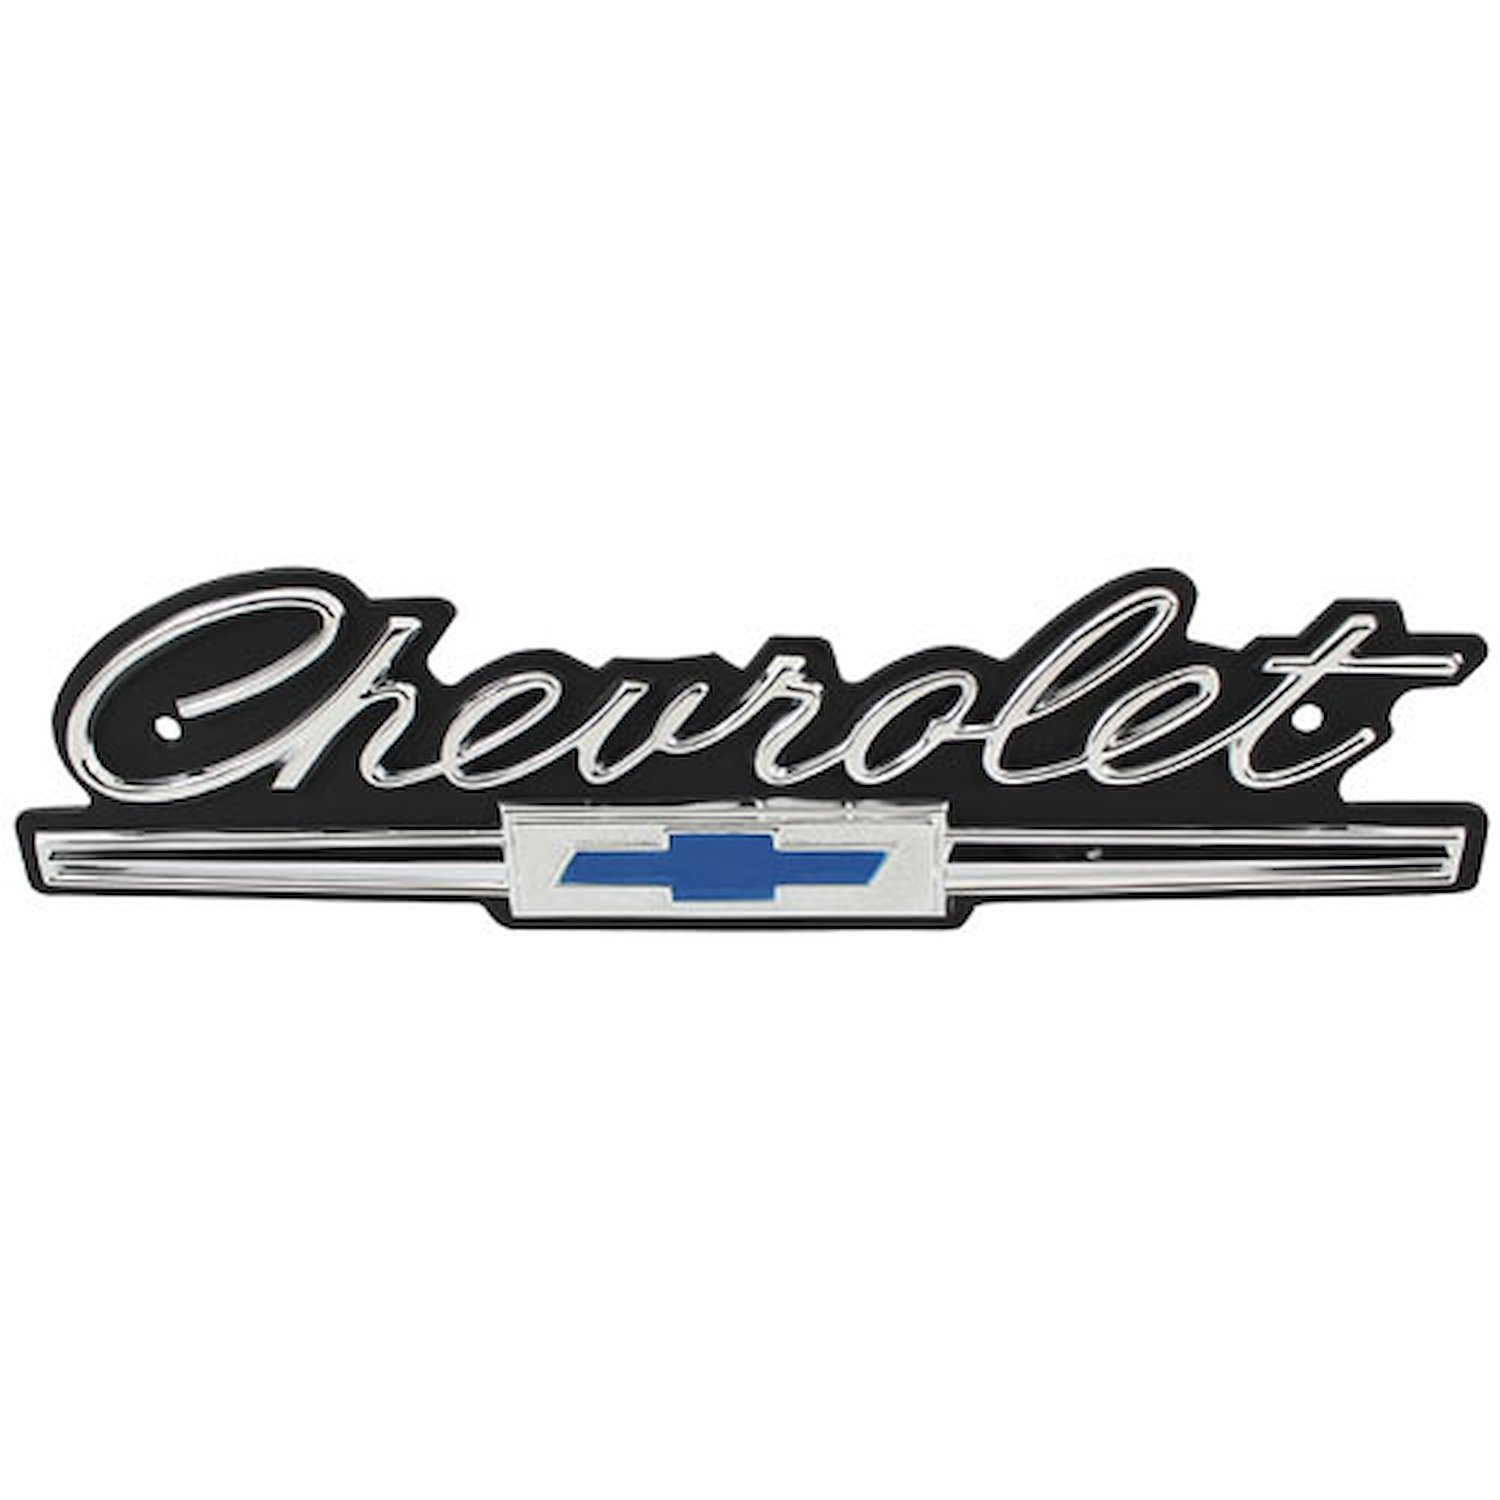 Grille Emblem 1966 Chevy Impala